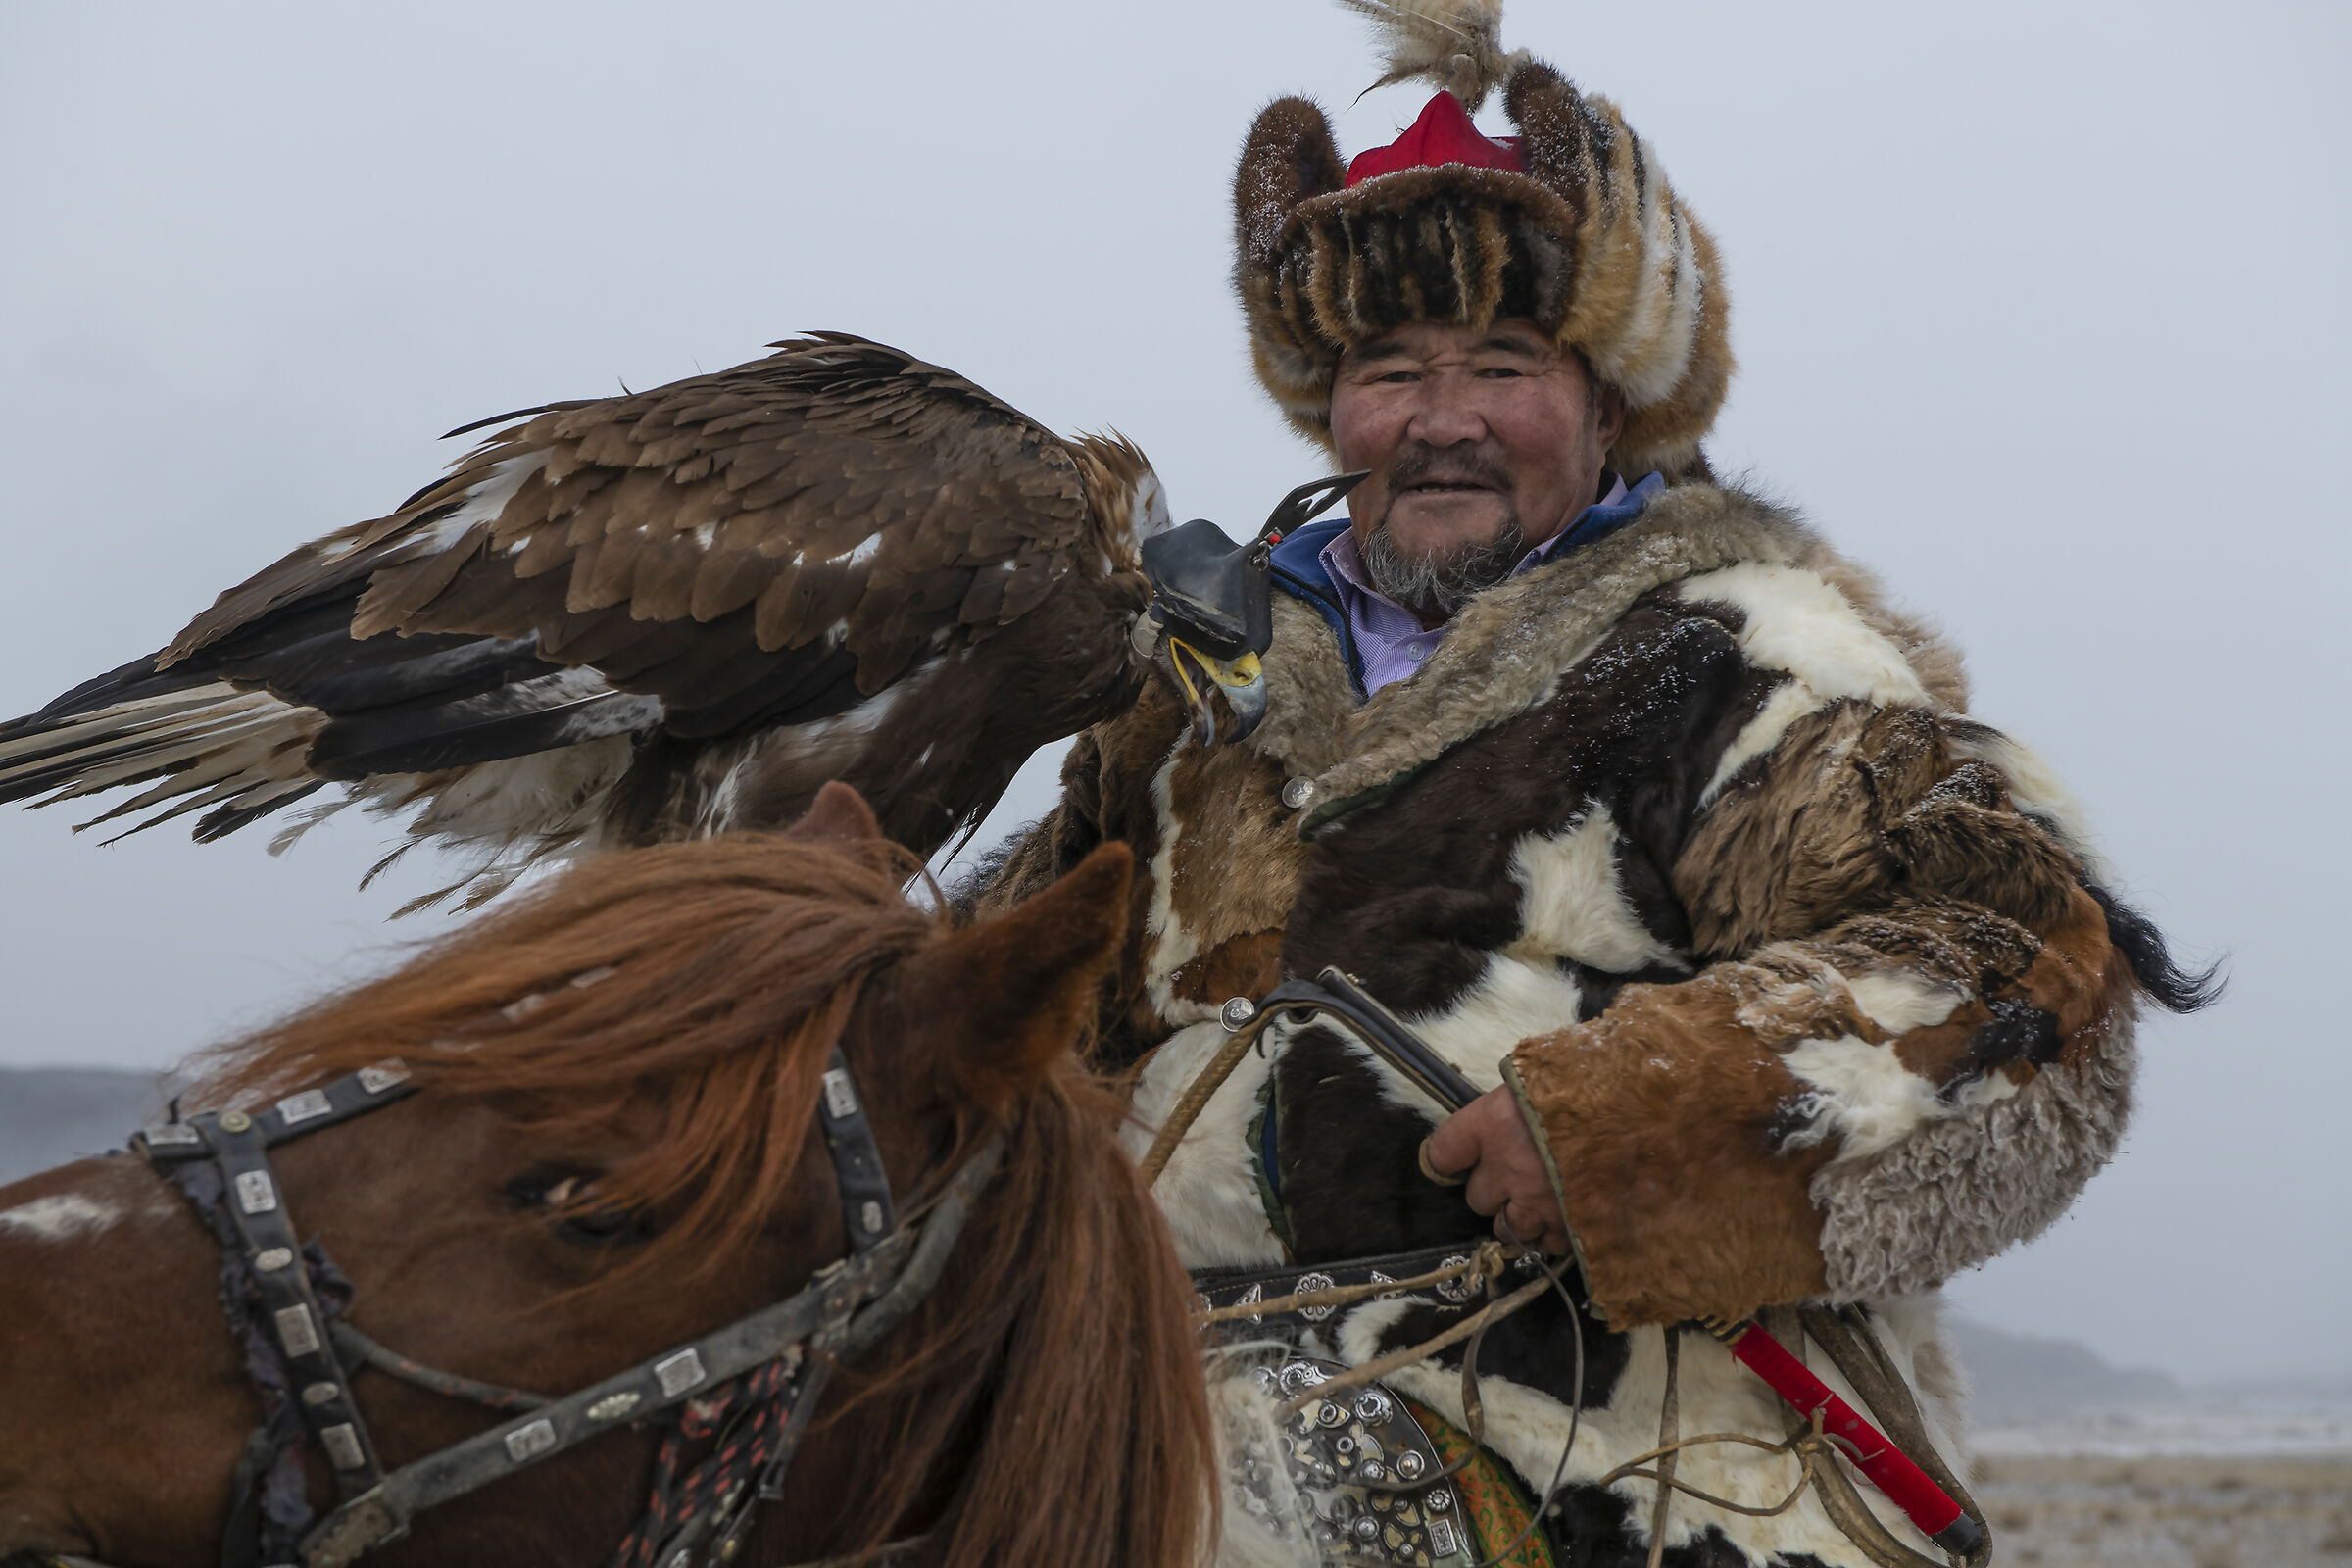 Orgoglio mongolo...